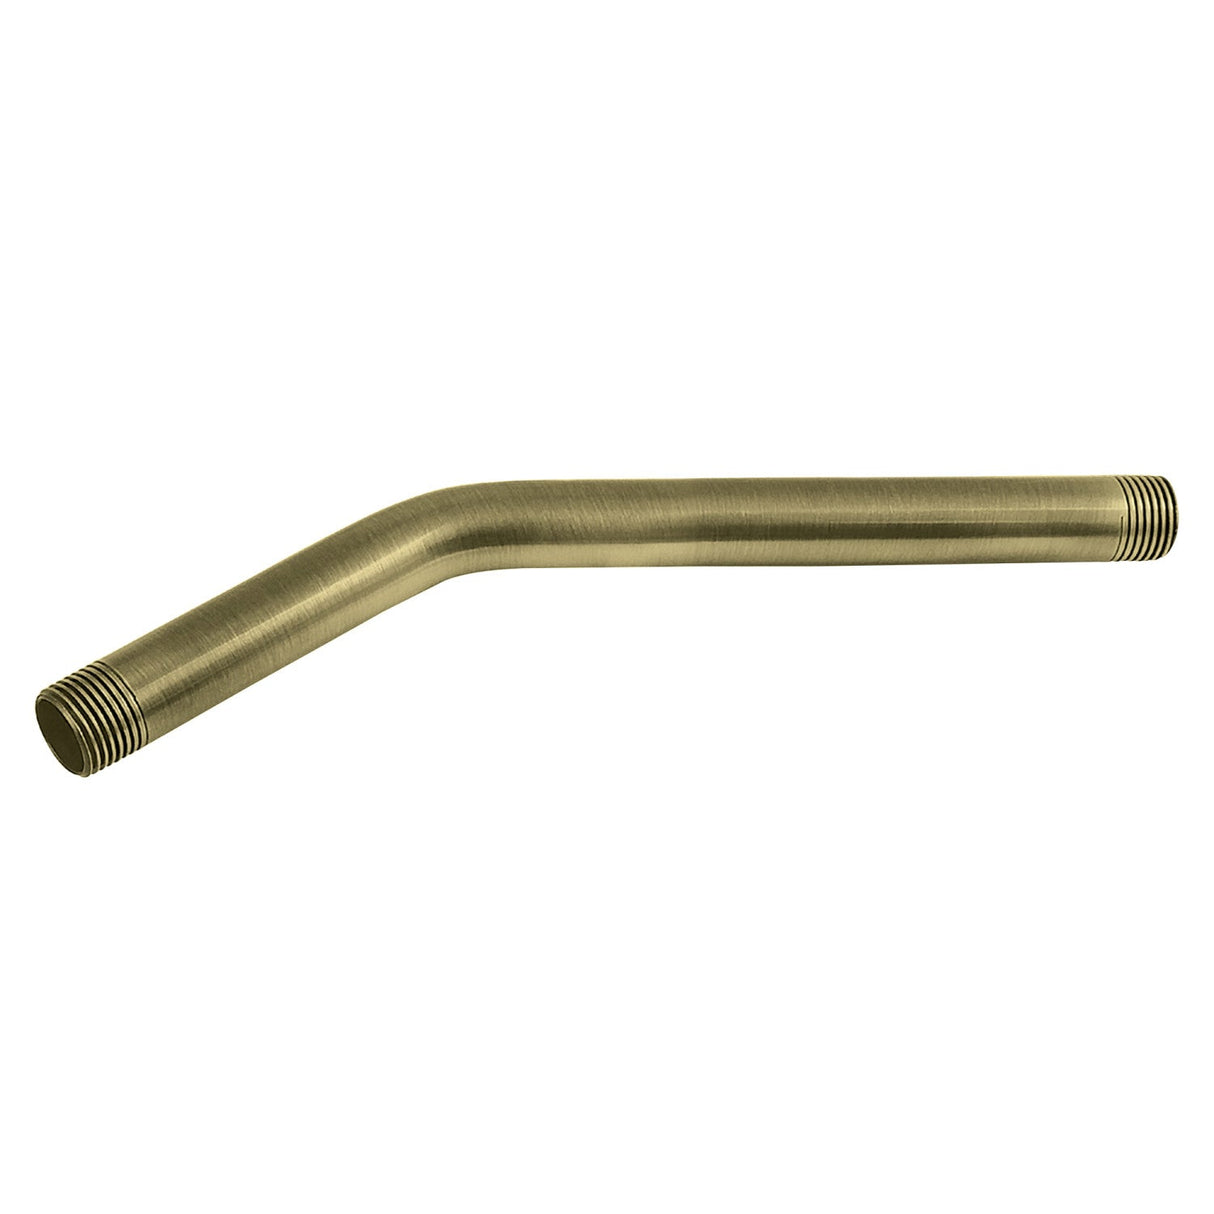 Showerscape K162A3 10-Inch Shower Arm, Antique Brass